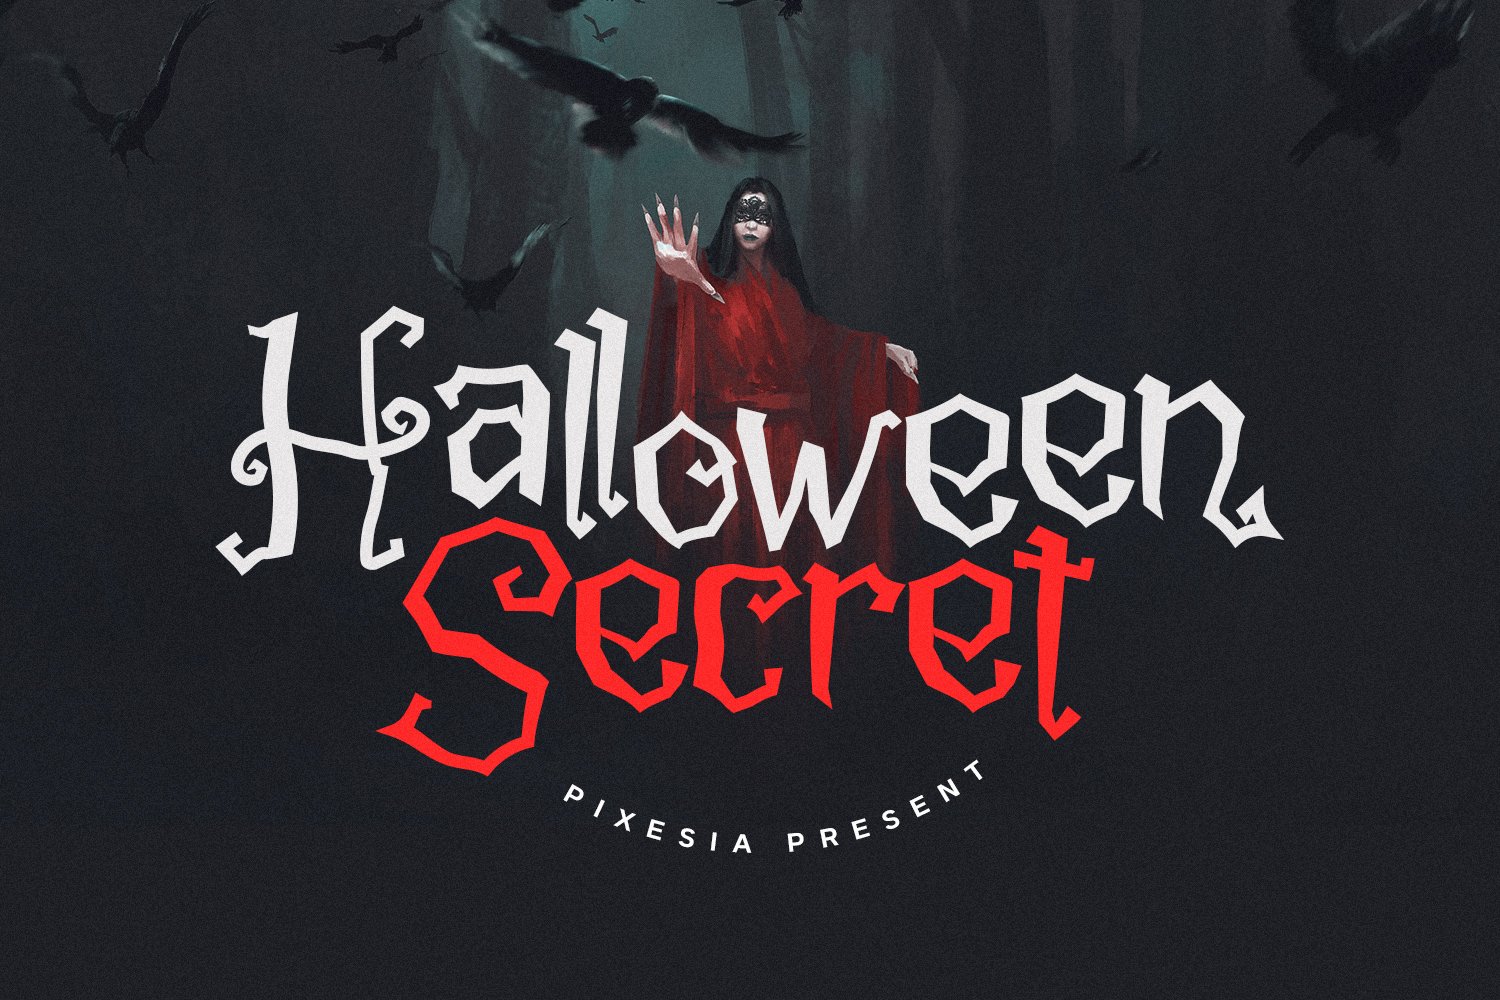 Halloween Secret - Spooky Mist Font cover image.